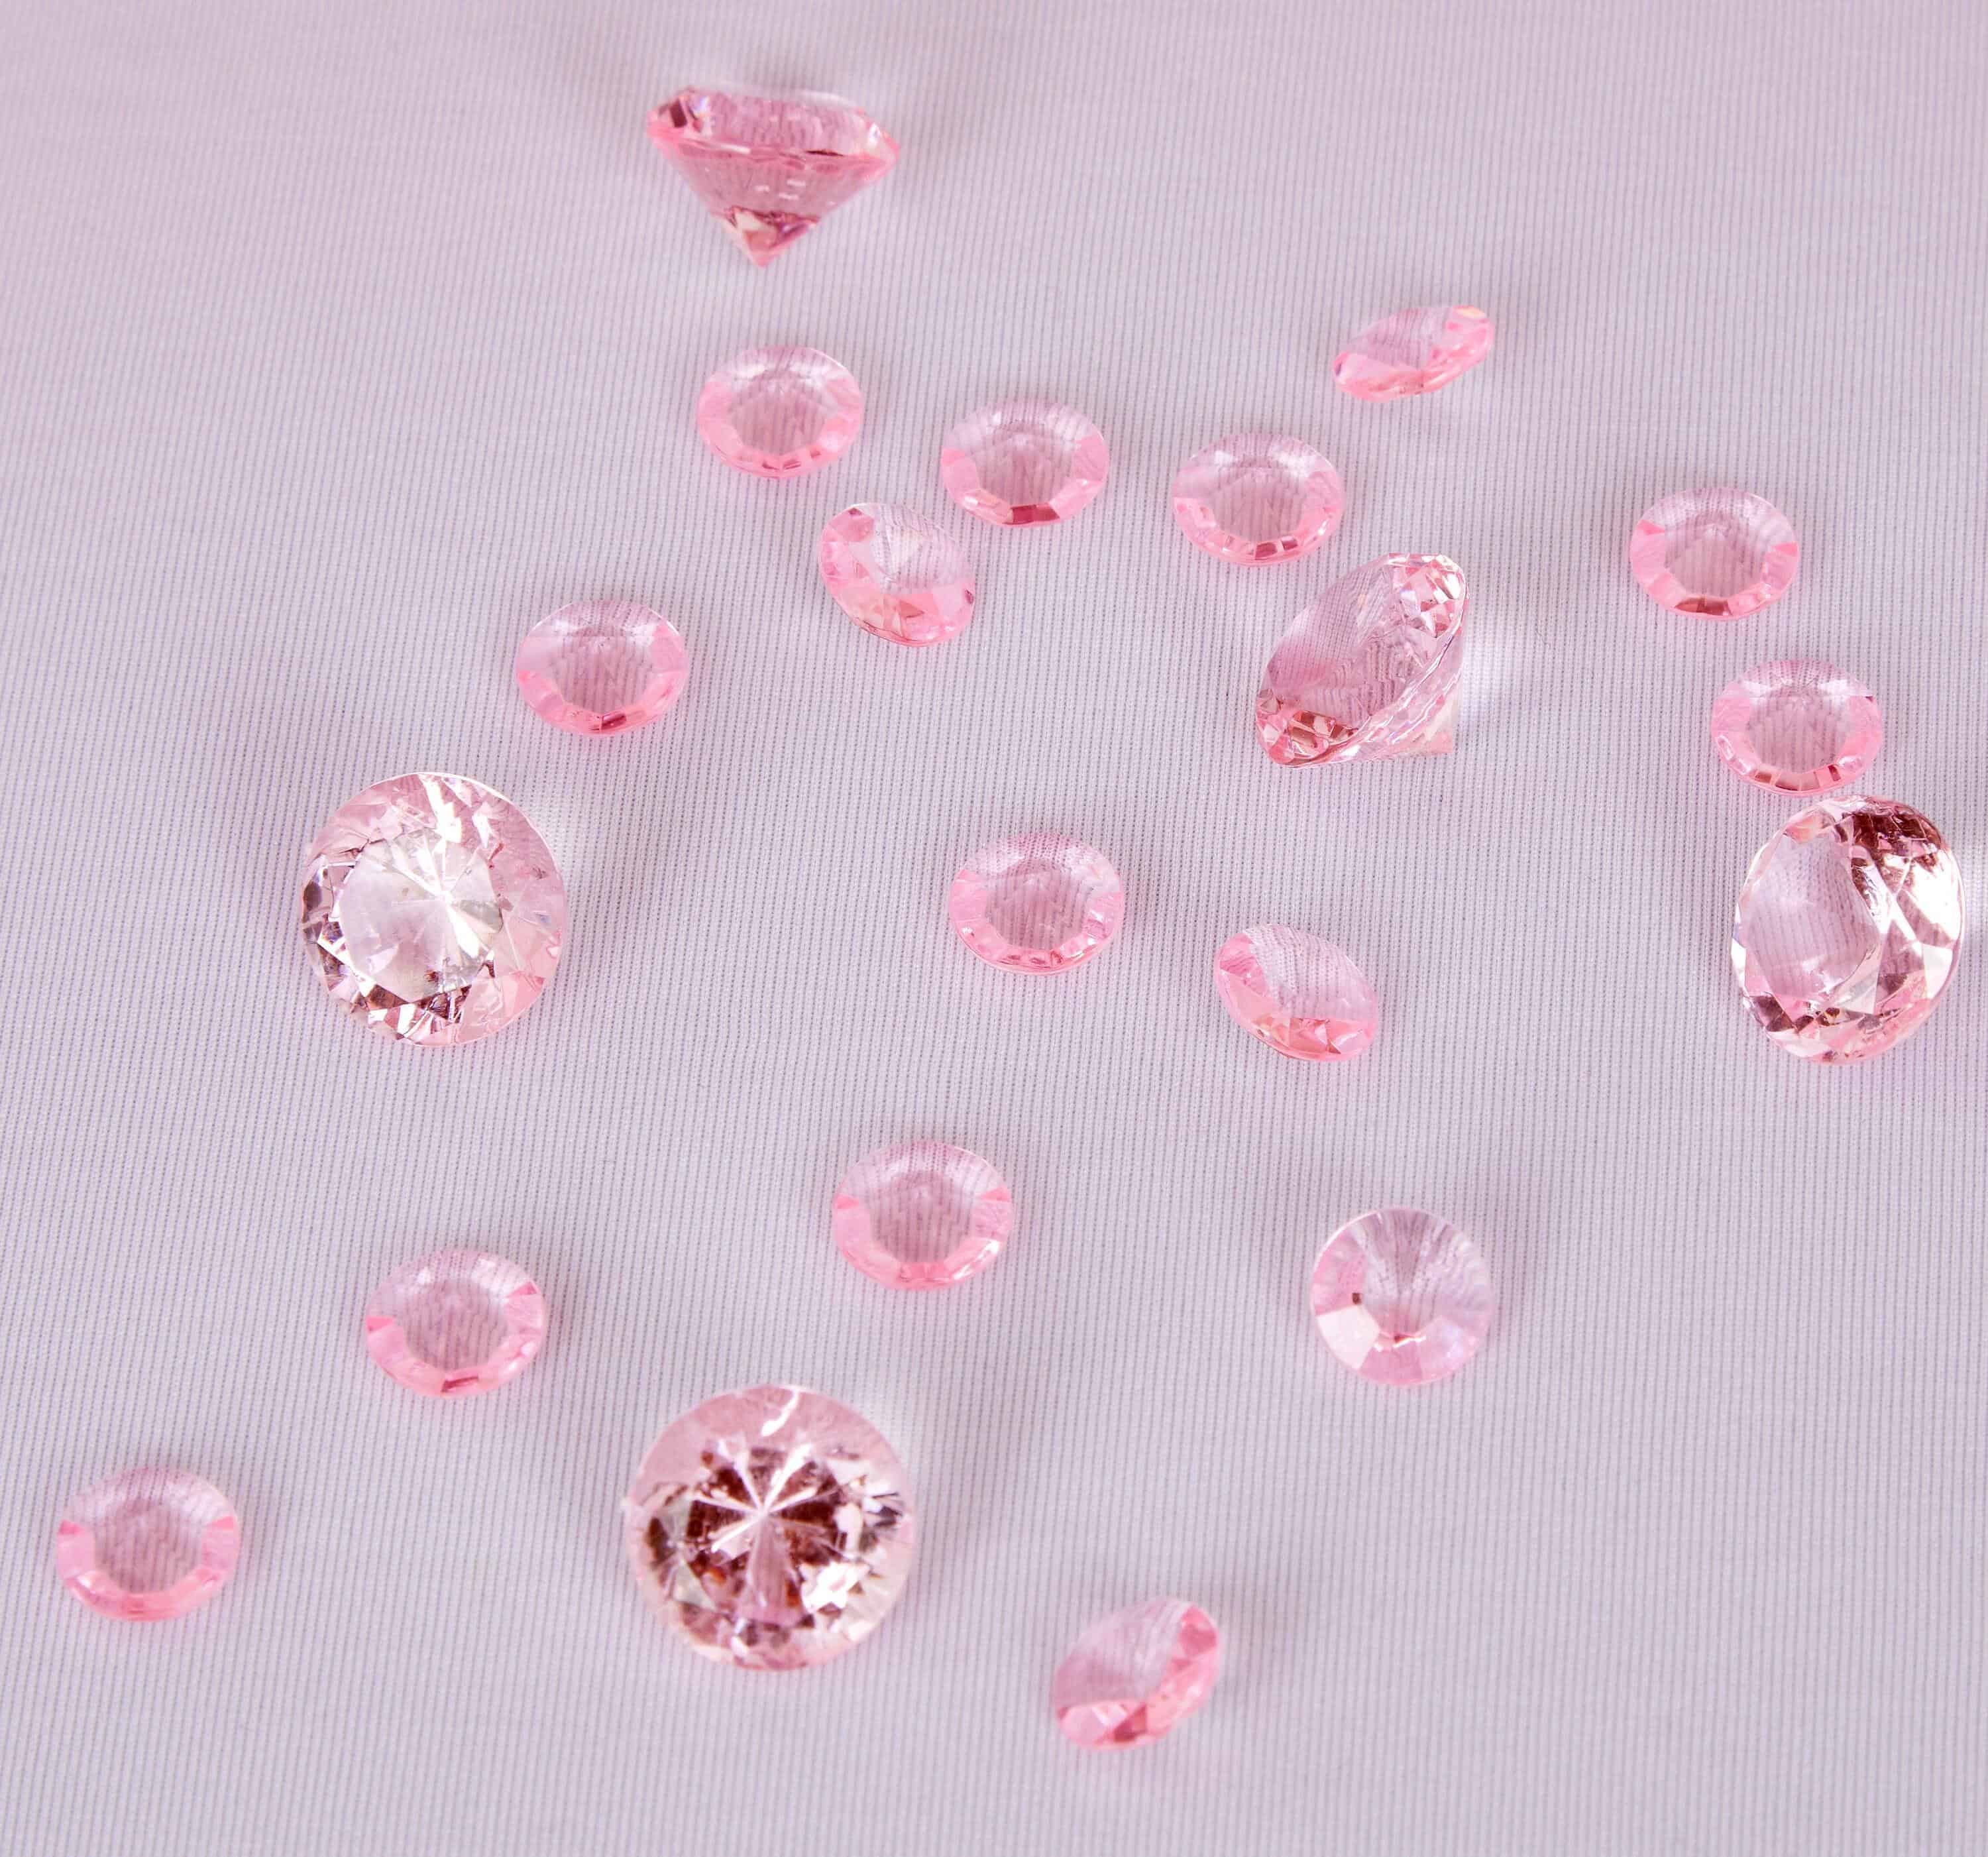 Pink diamond confetti